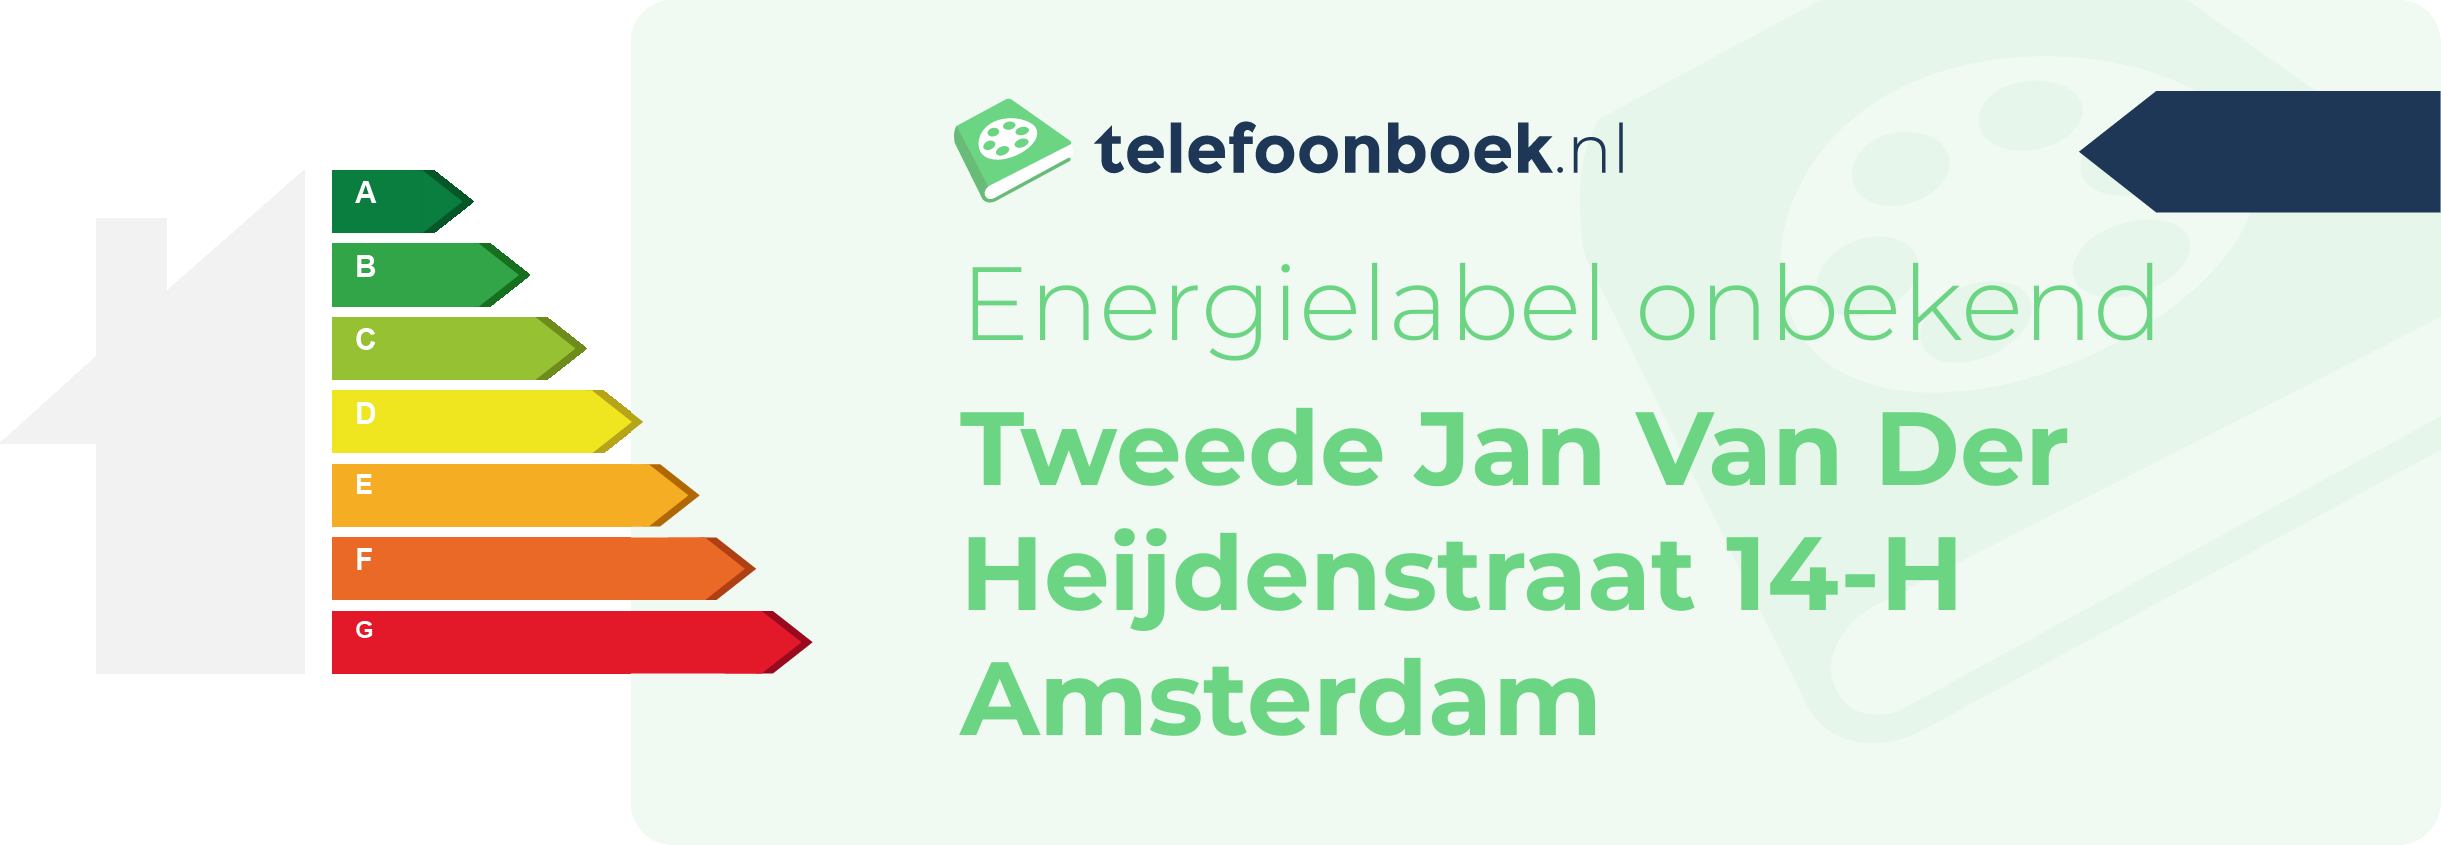 Energielabel Tweede Jan Van Der Heijdenstraat 14-H Amsterdam